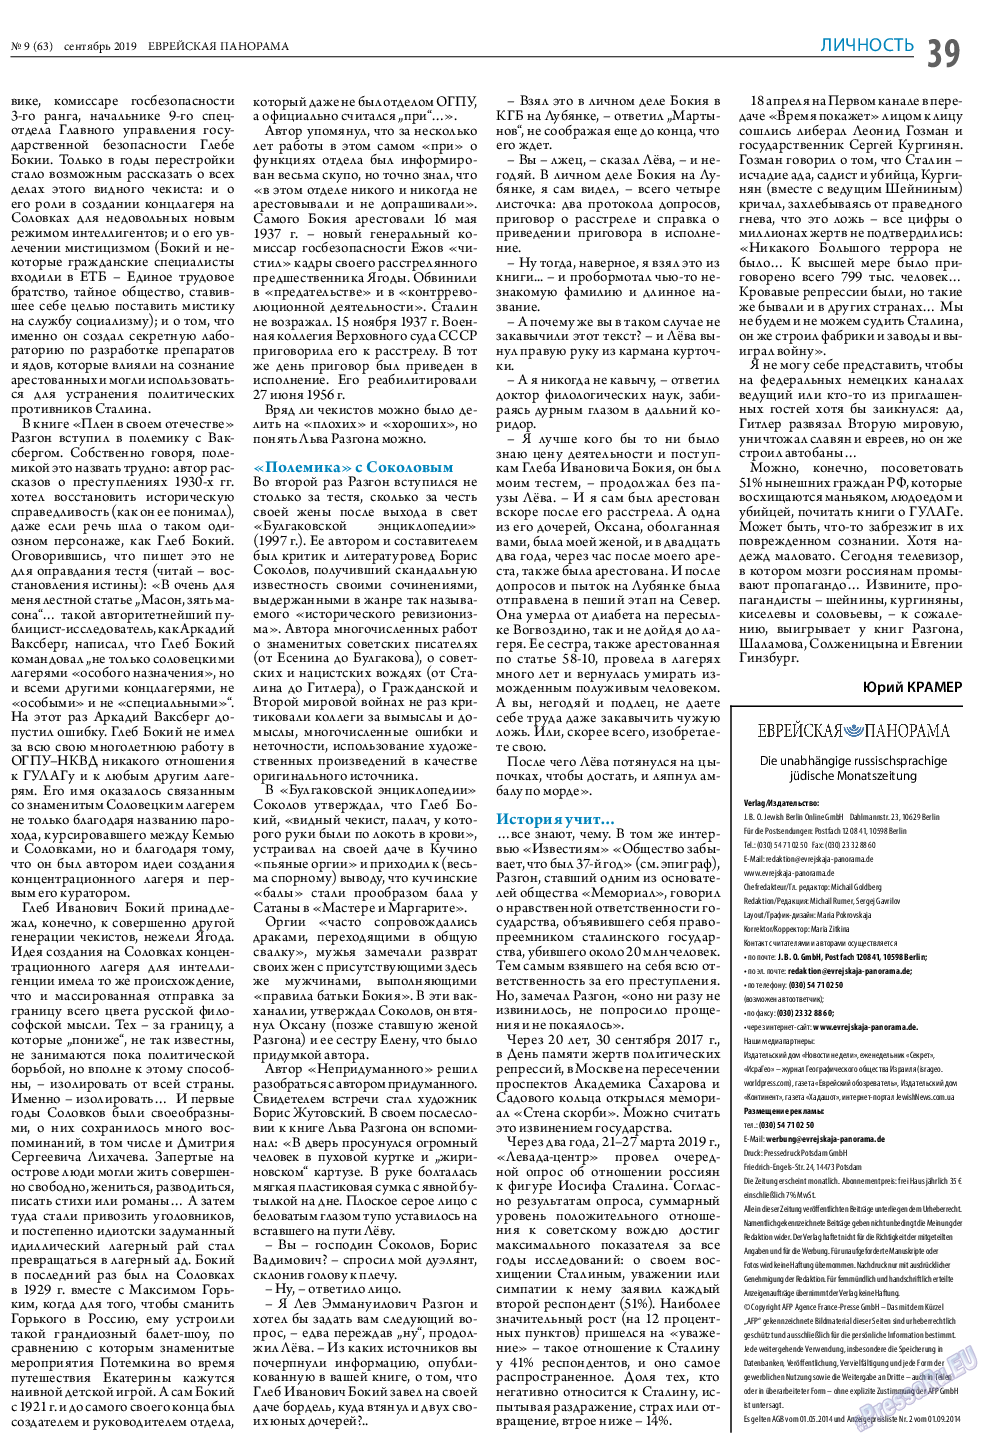 Еврейская панорама, газета. 2019 №9 стр.39